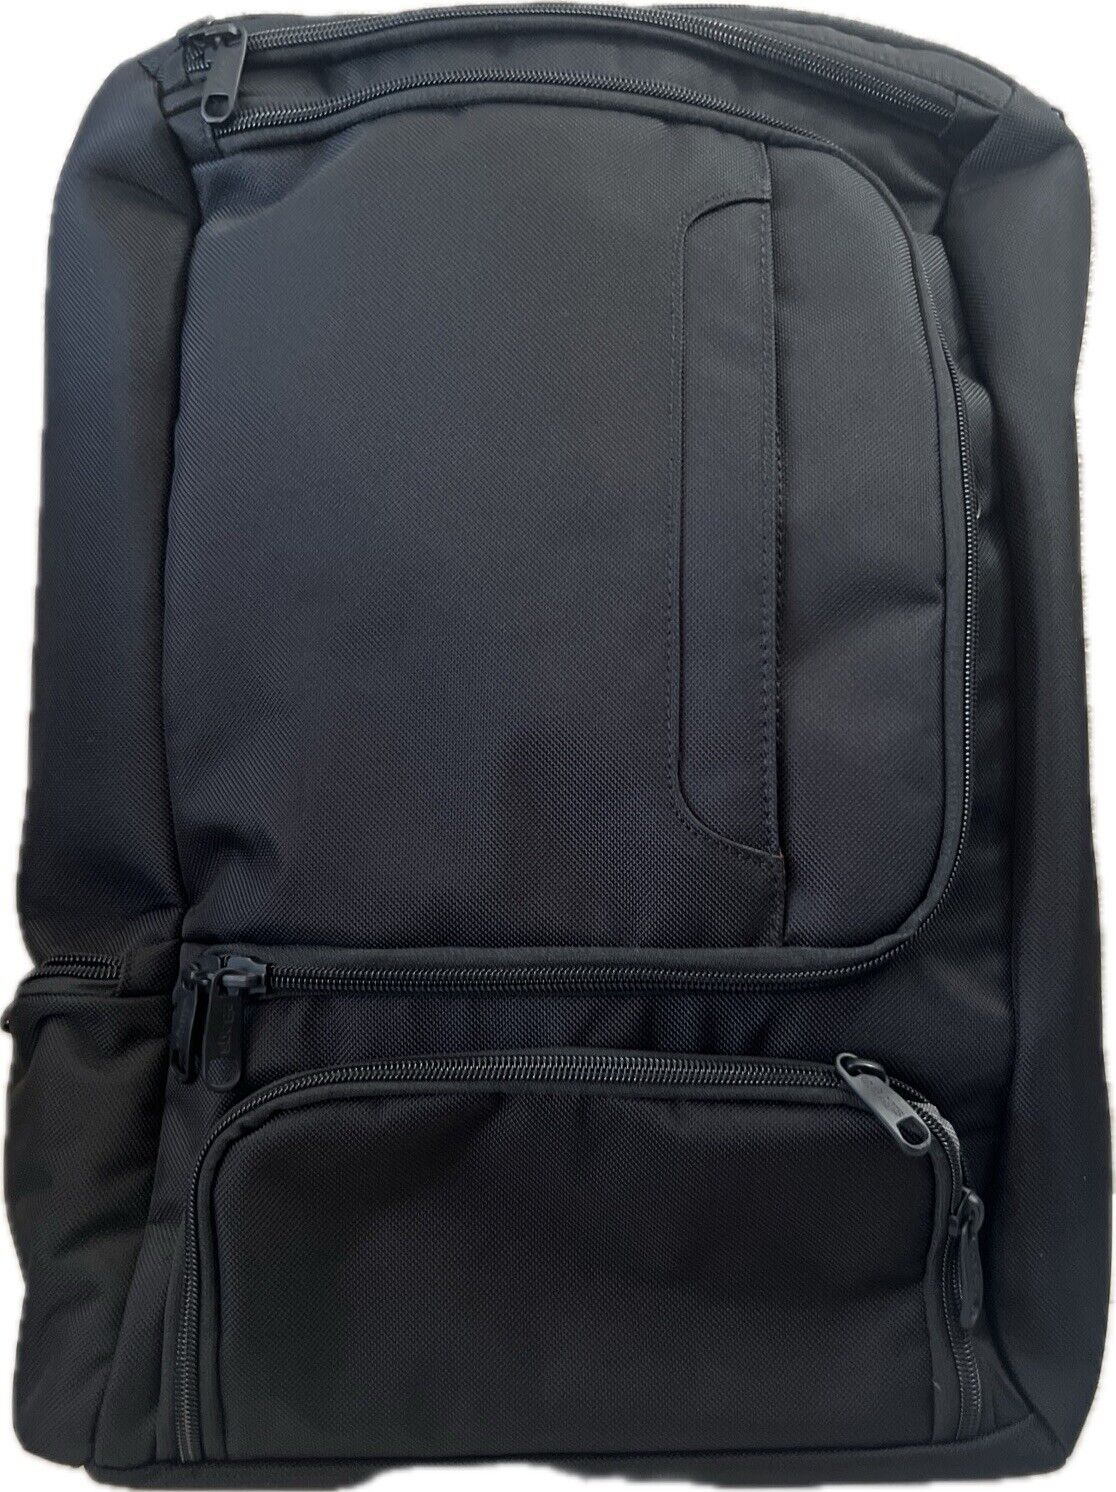 eBags EB2146-16 TLS Professional PRO Slim Laptop Travel Backpack Black NWOT NEW